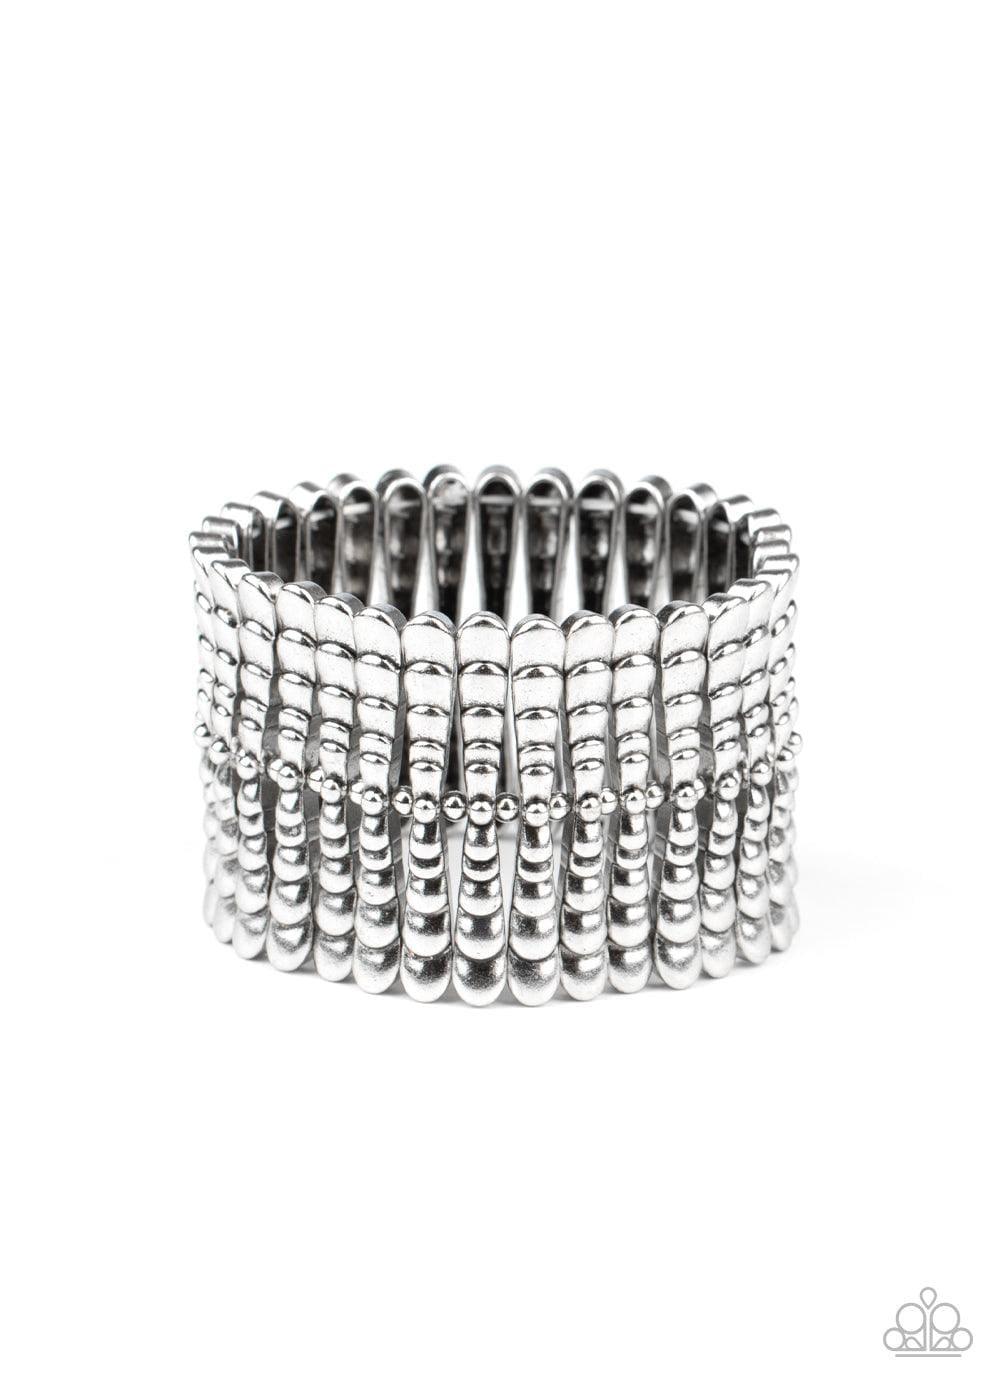 Paparazzi Accessories - Level The Field - Silver Bracelet - Bling by JessieK